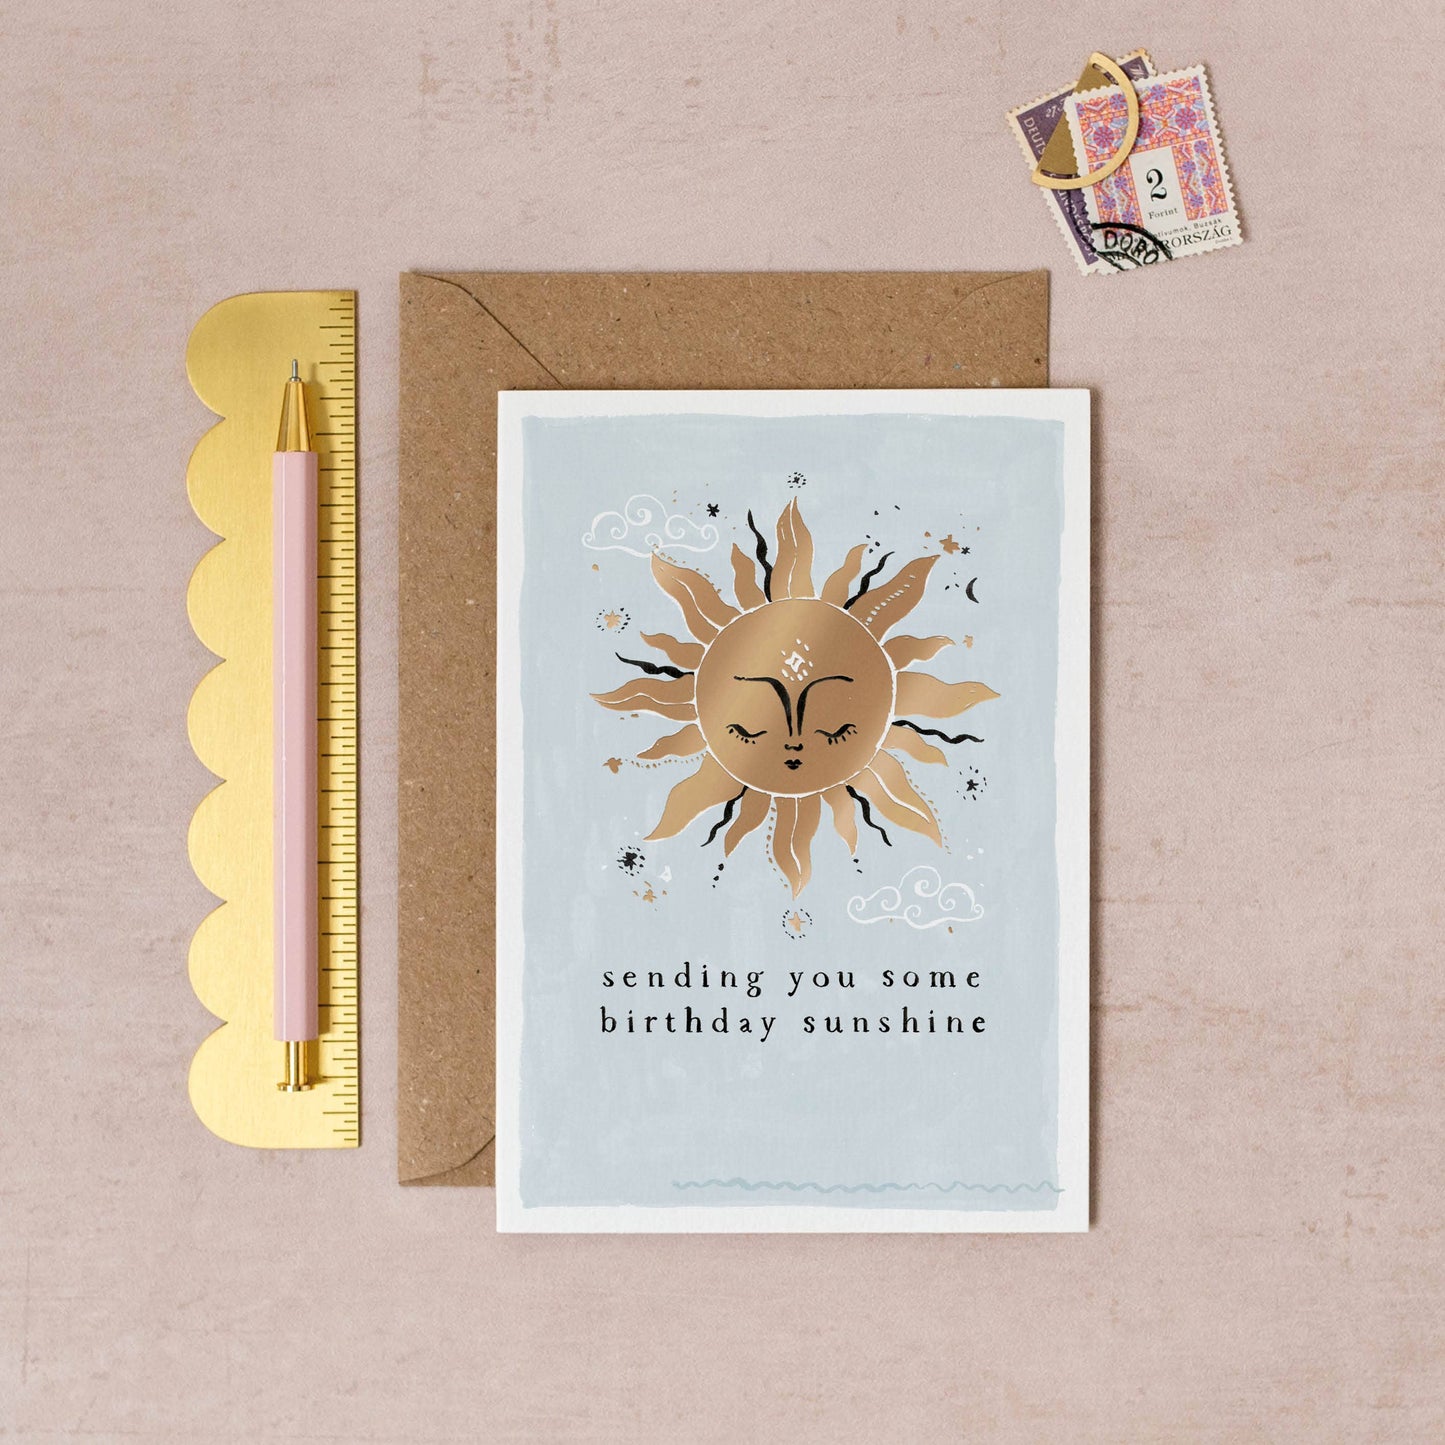 Sending Sunshine Birthday Card By Sister Paper Co.